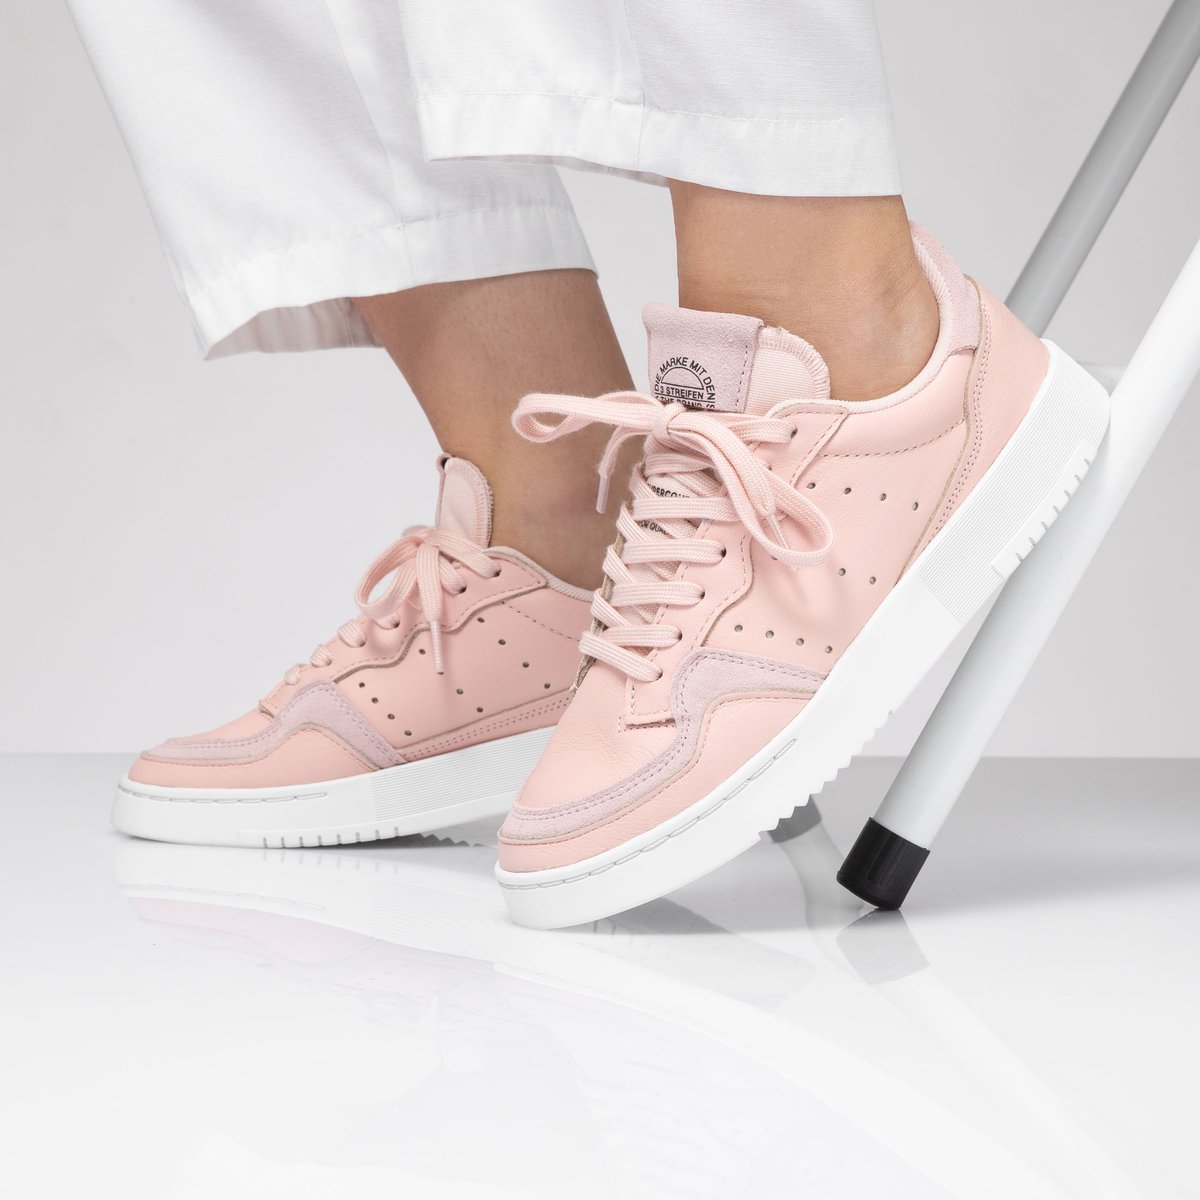 supercourt adidas pink